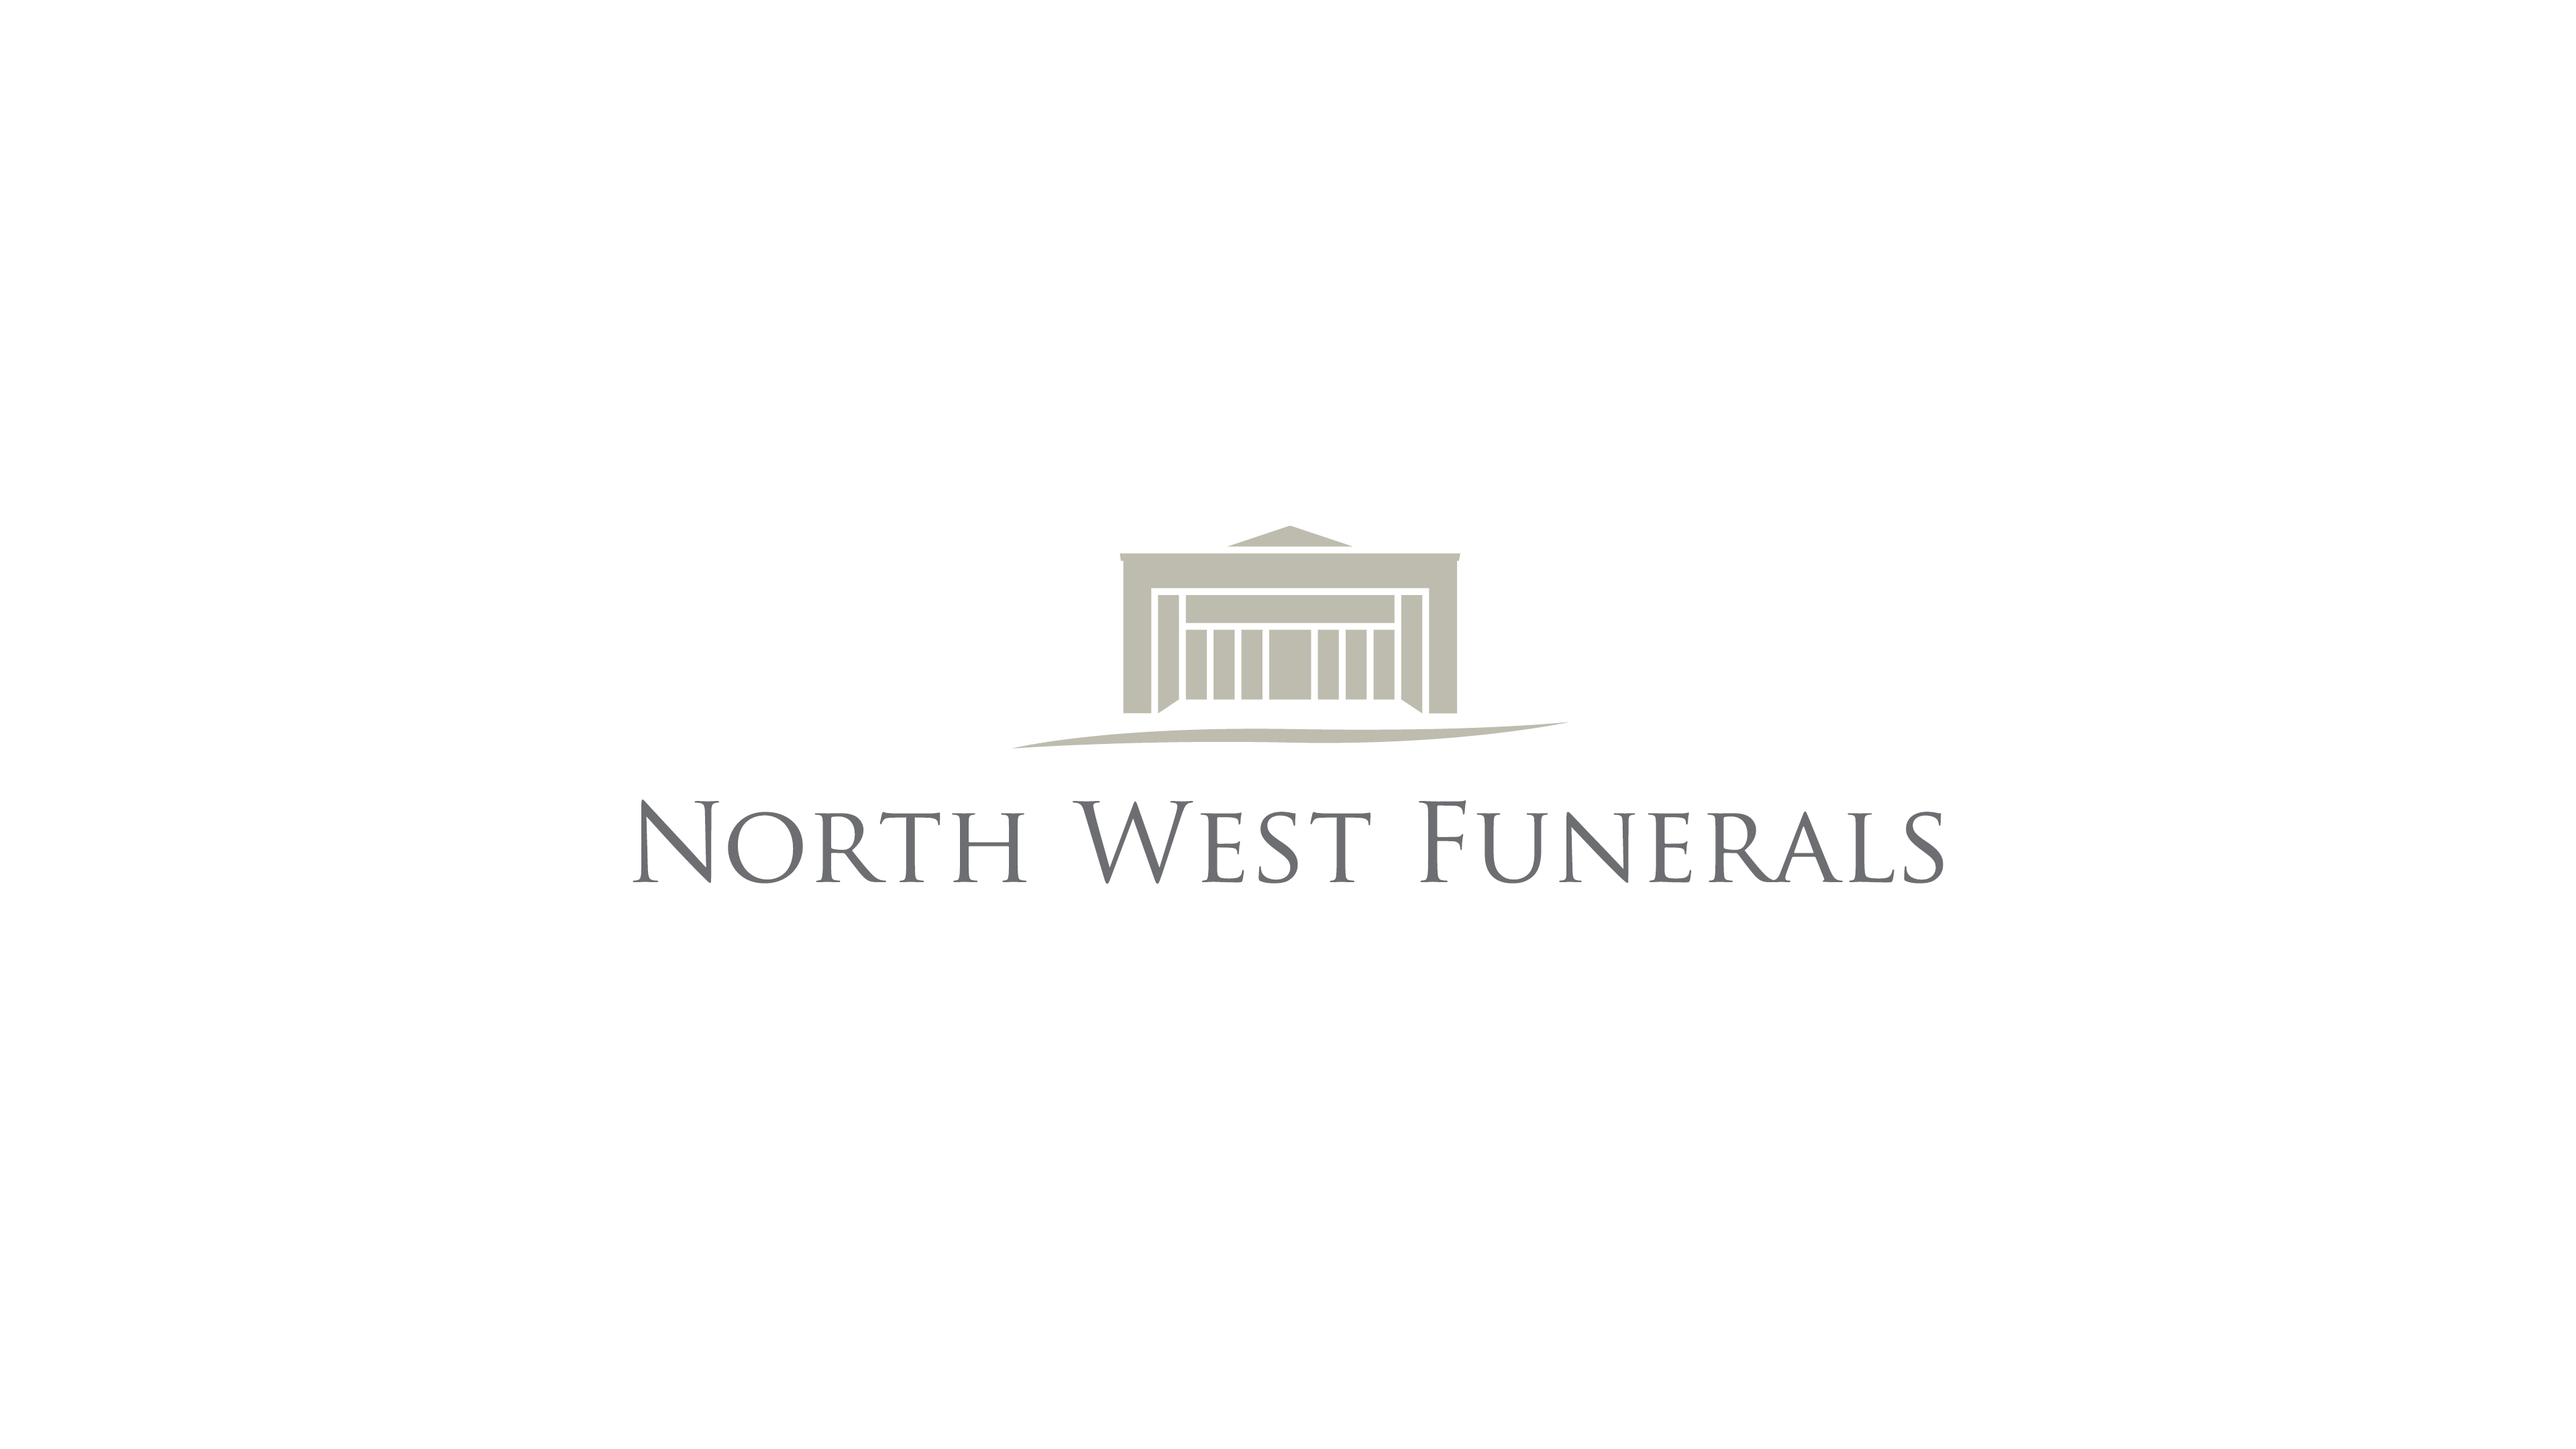 Northwest Funerals Logo and Branding Design - Saunders Design Group